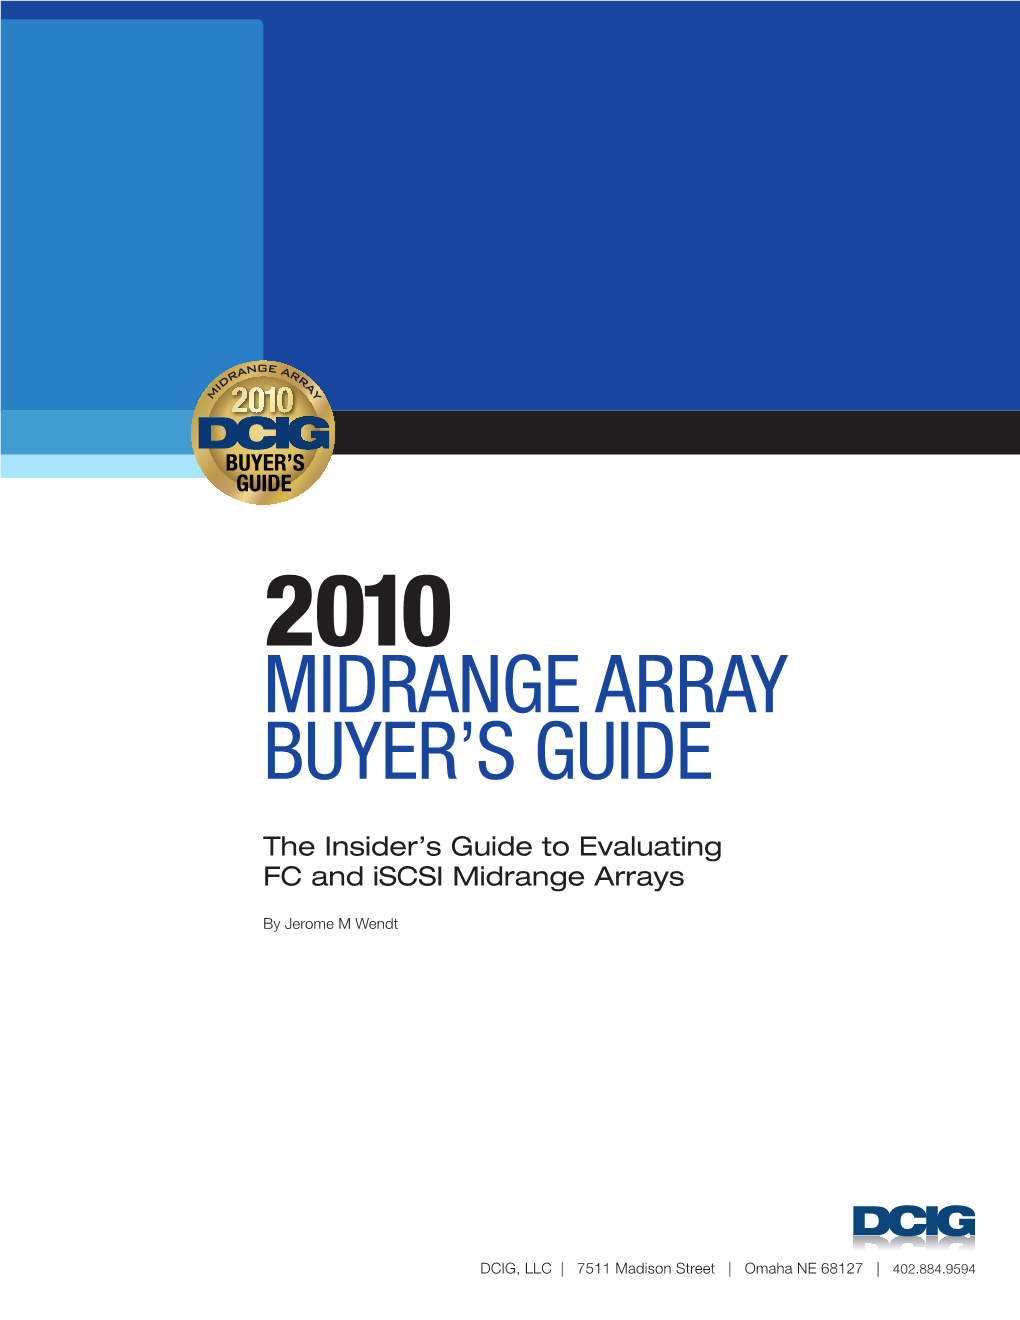 Midrange Array Buyer's Guide